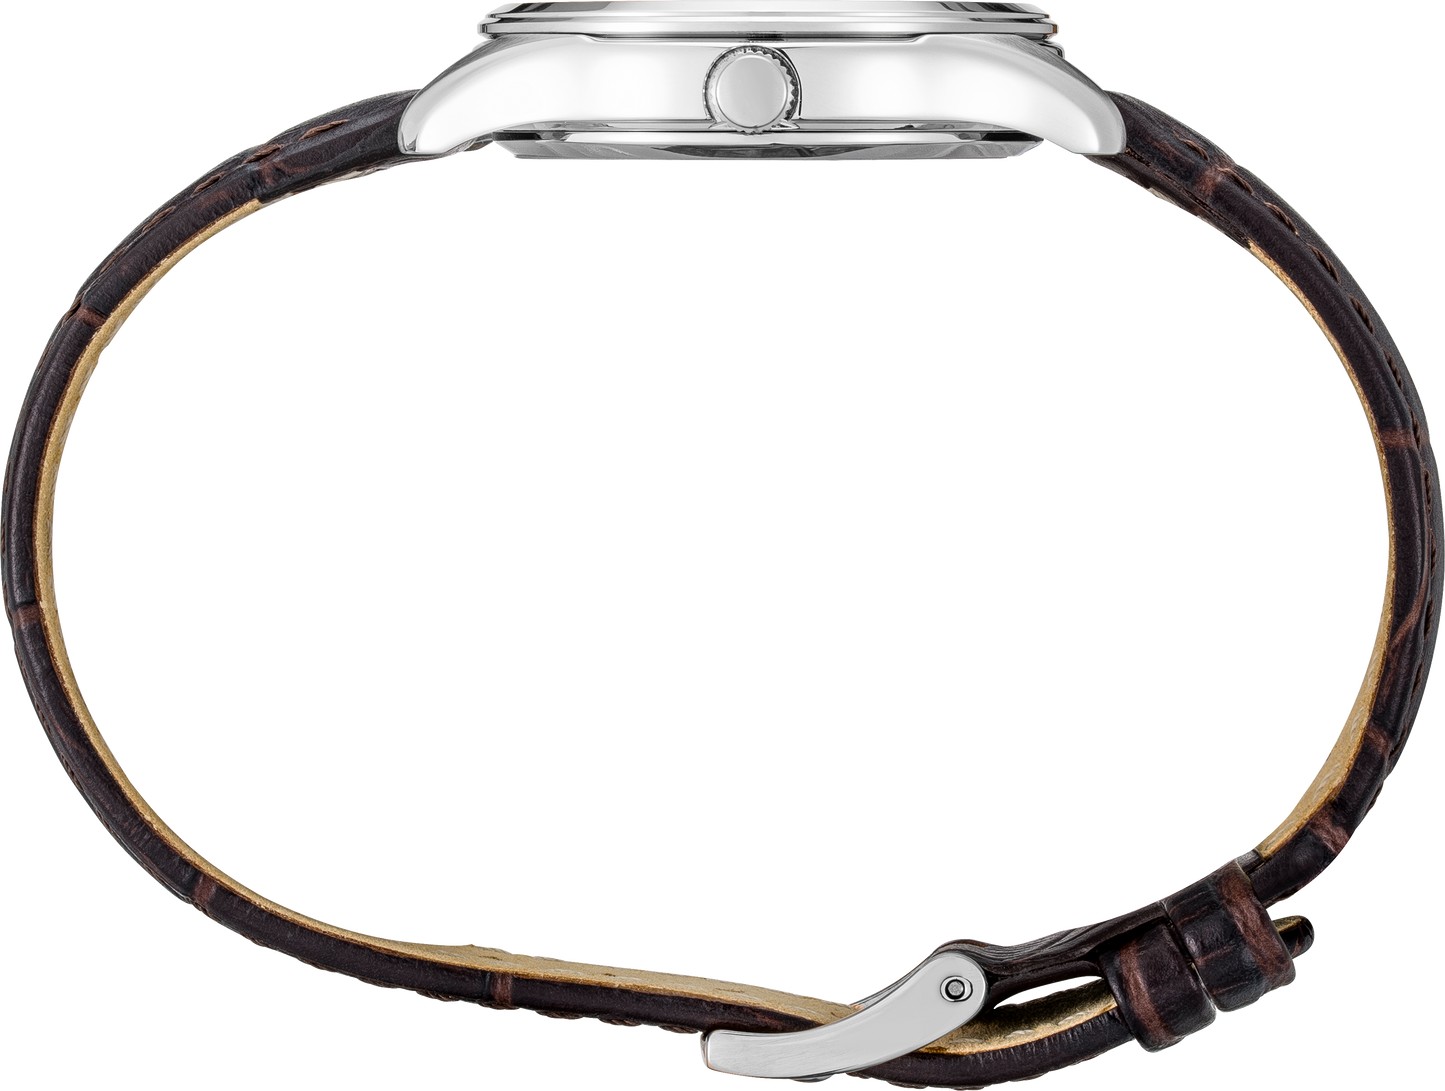 Seiko Women's Noble Brown Leather Watch - Multi SUR427